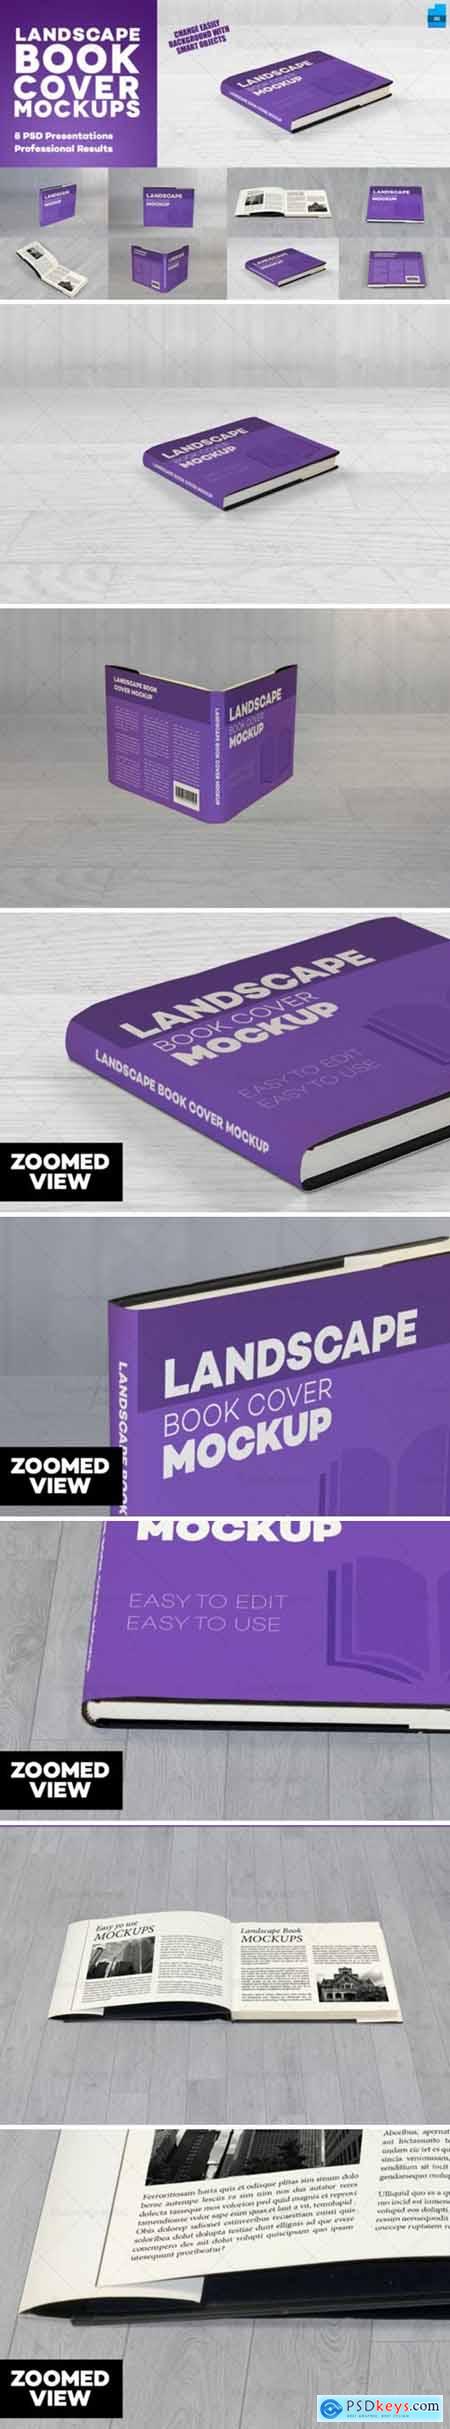 Realistic Landscape Book Cover Mockups 3684664